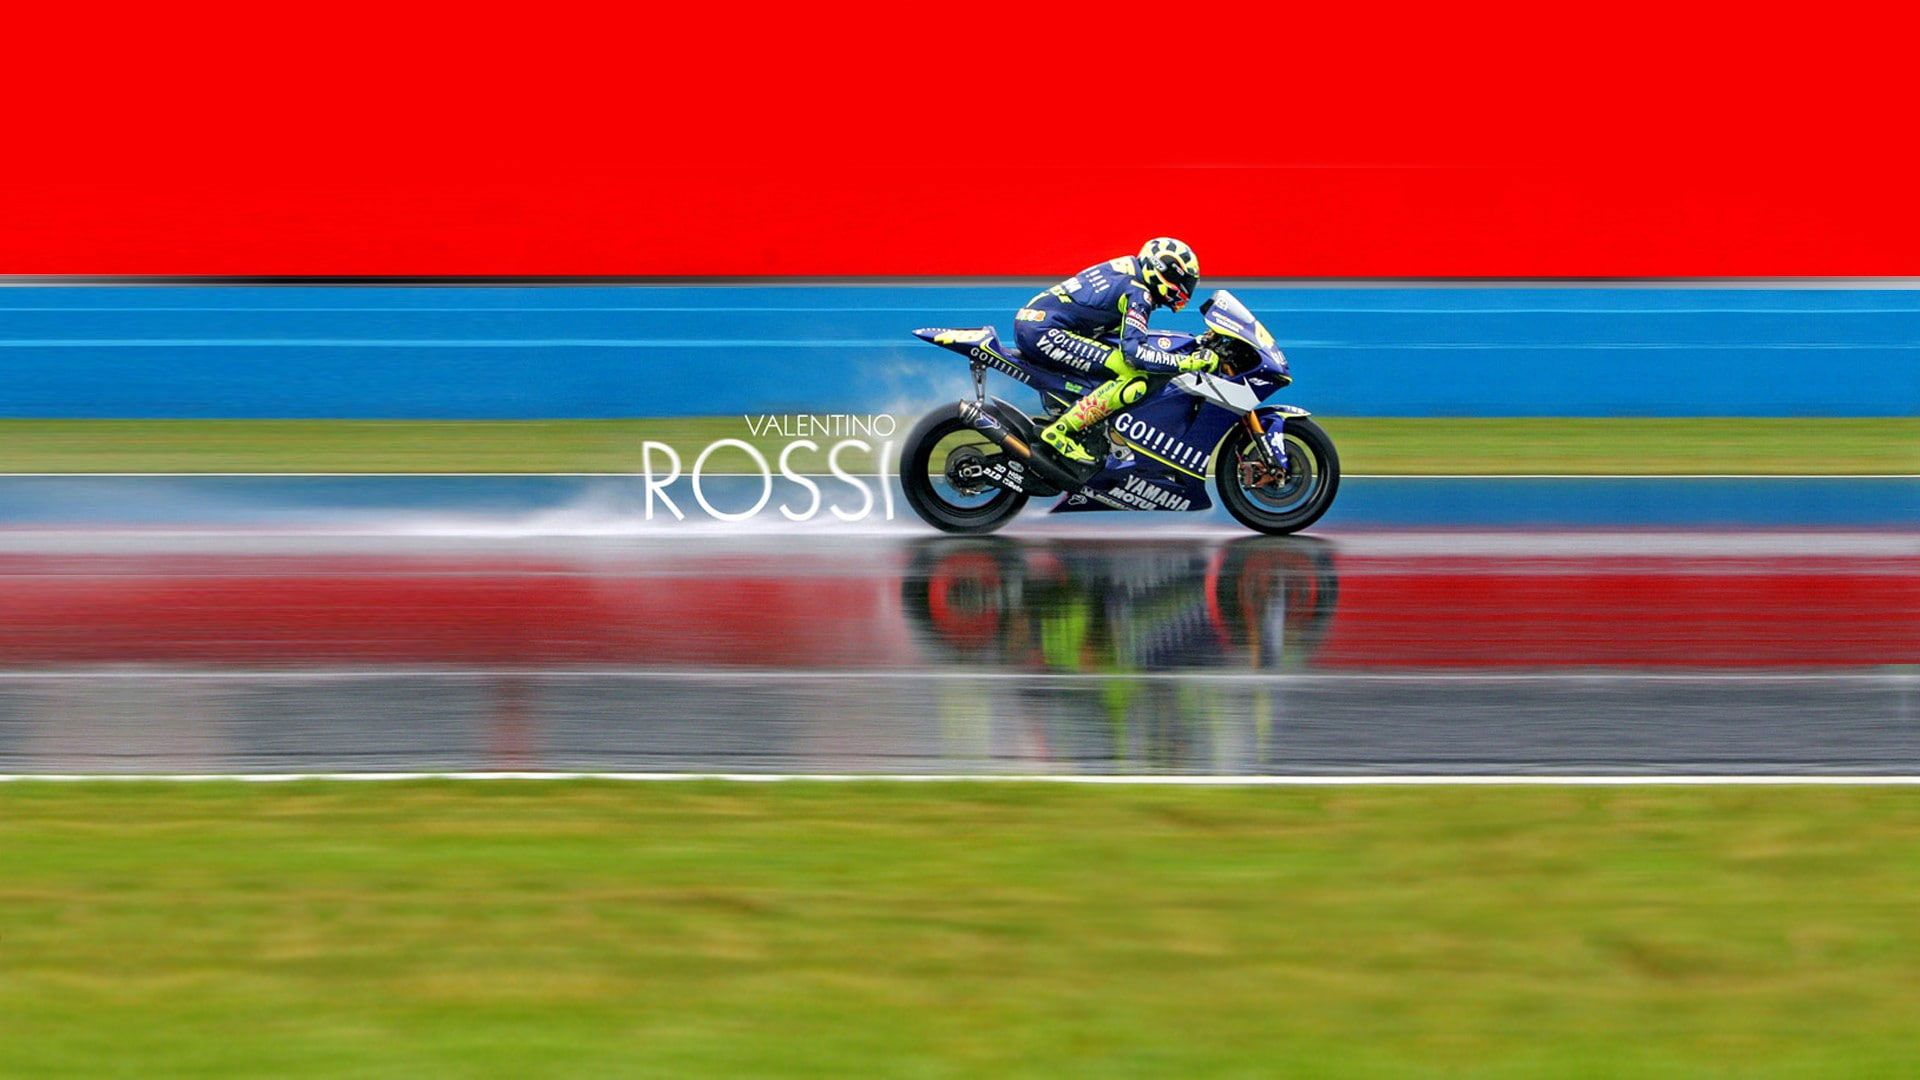  Valentino Rossi Hintergrundbild 1920x1080. Valentino Rossi Wallpaper, Blue And White Sport Bike, Motorcycle, Racing